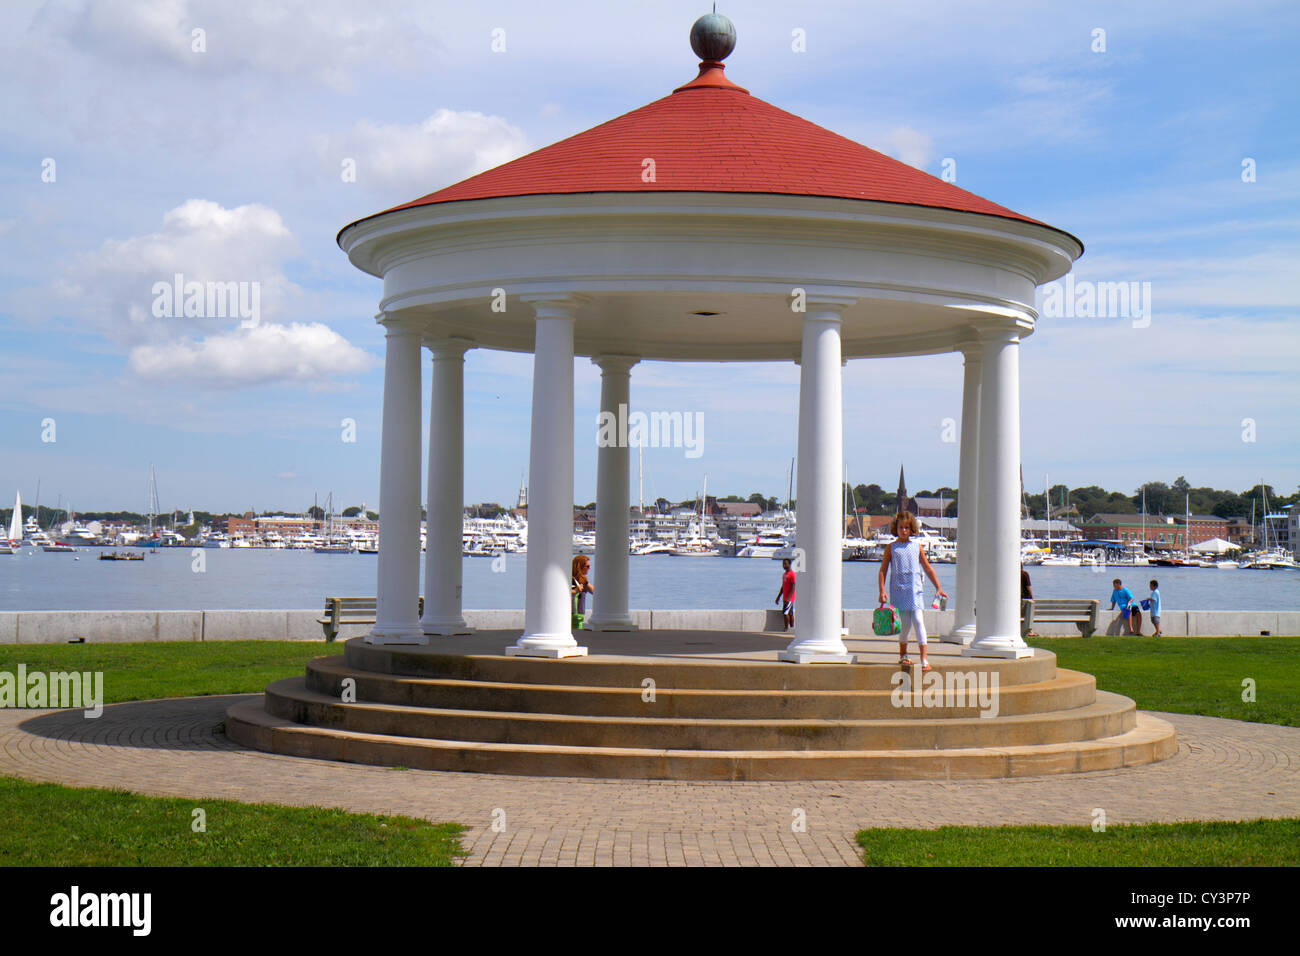 Newport Rhode Island, New England, King Park, Brenton Cove, Newport Harbor, Pavillon, Boote, Besucher reisen Reise Touristik Wahrzeichen Stockfoto